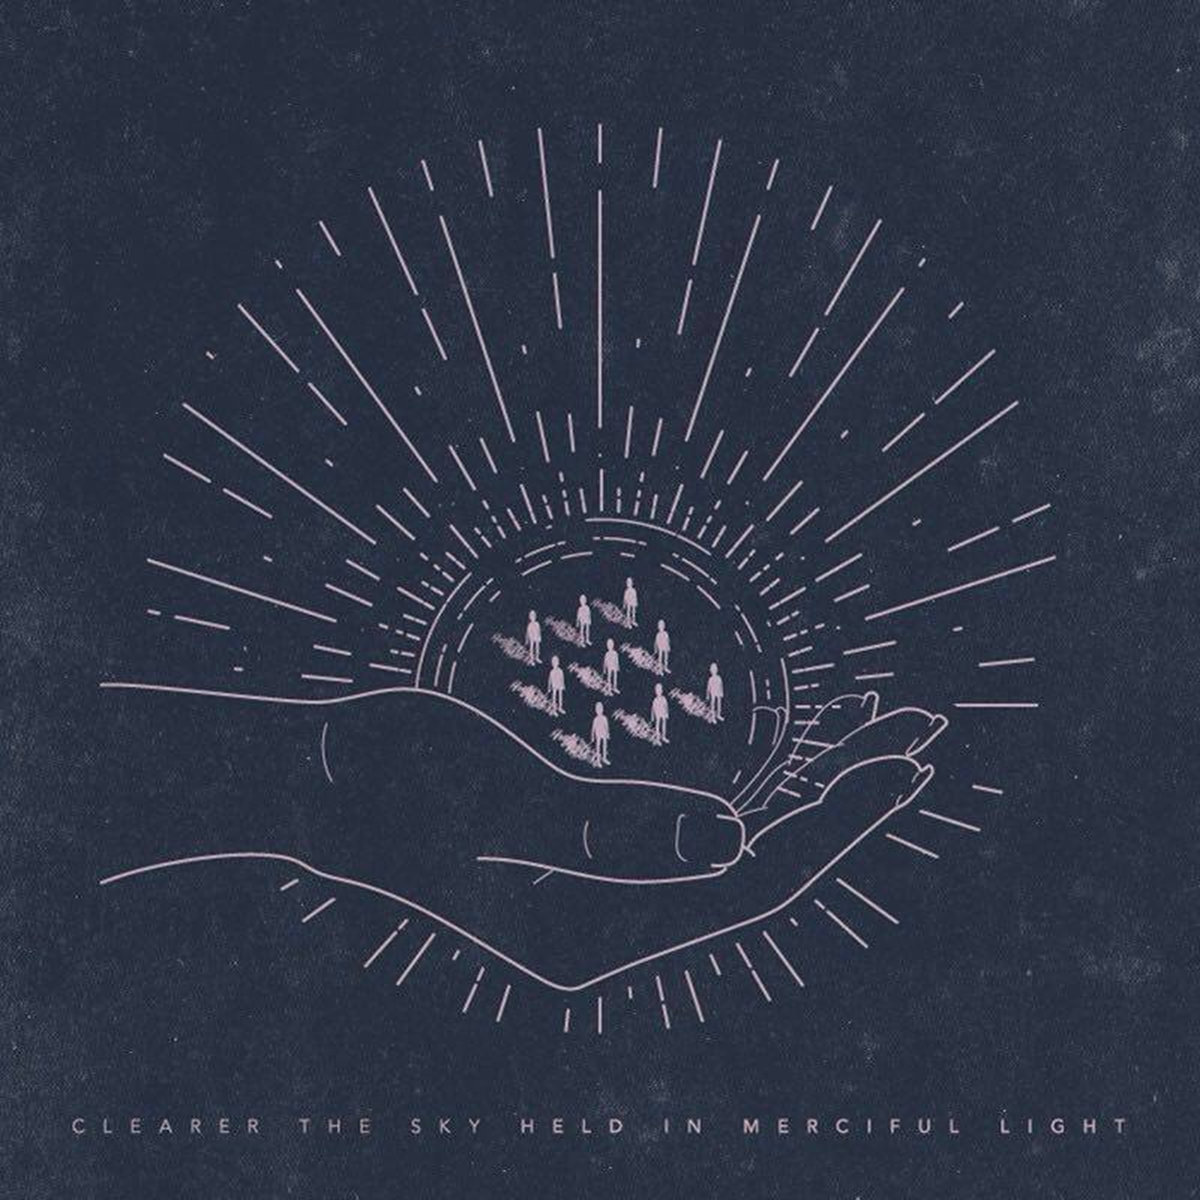 Clearer the Sky - Held in Merciful Light (2016) Album Info